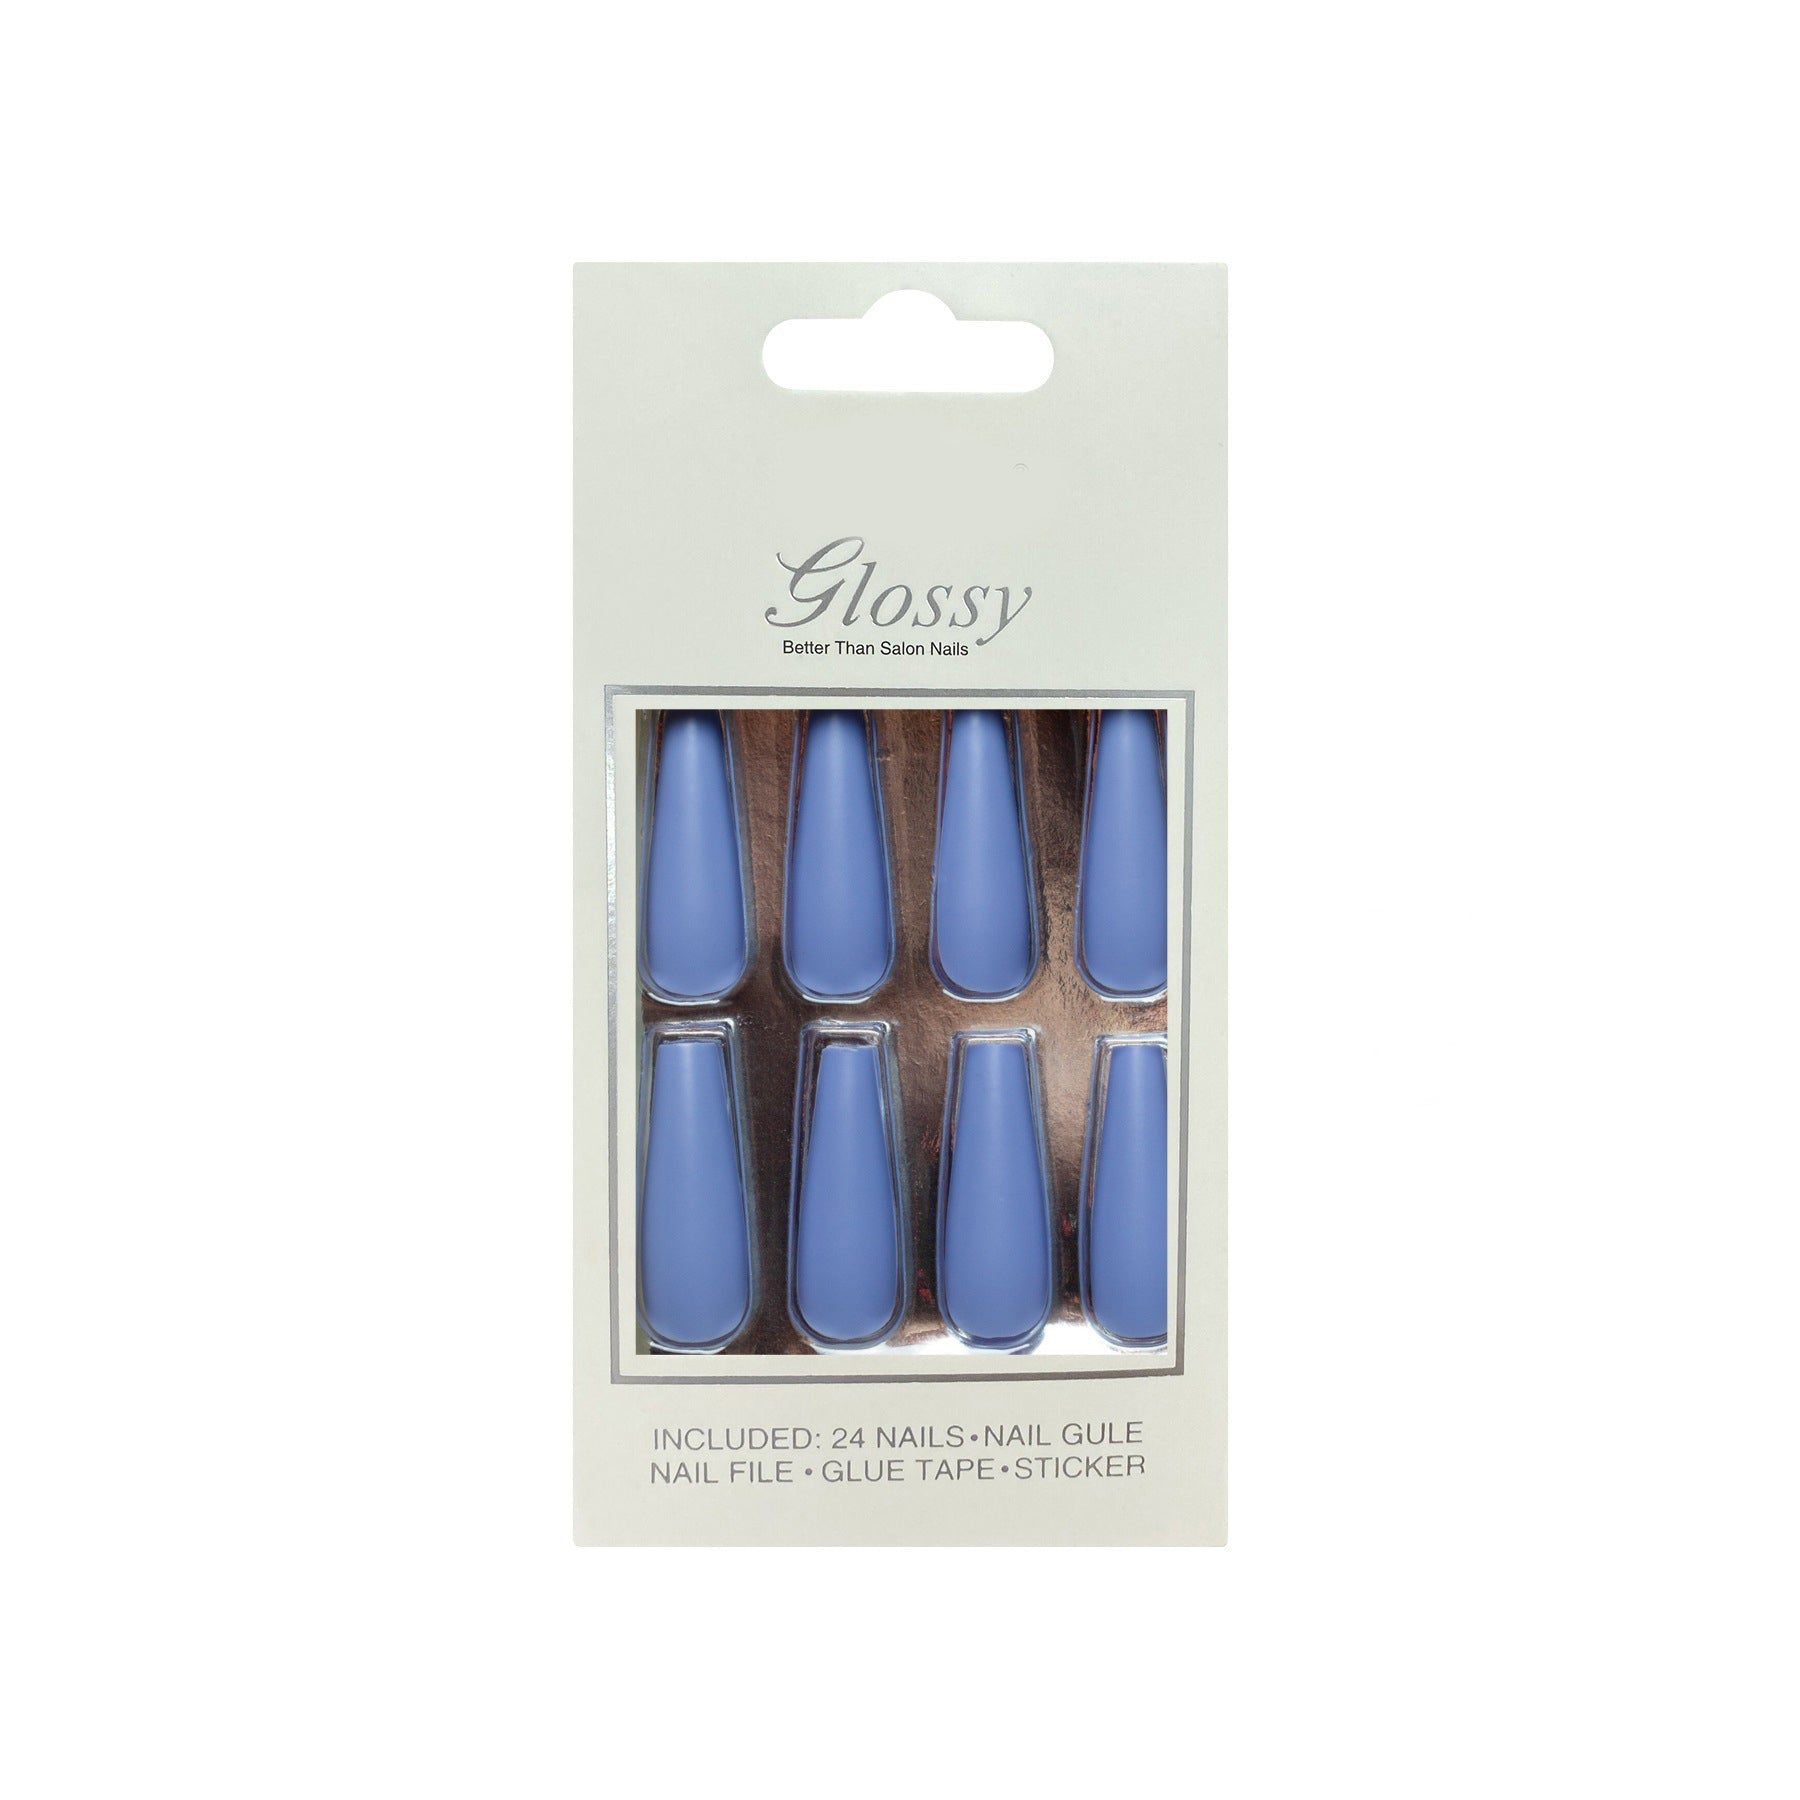 30pcs/box Packaging Nail Suppliers Artificial Fingernails Press On Nails - T4x Quadruple Love